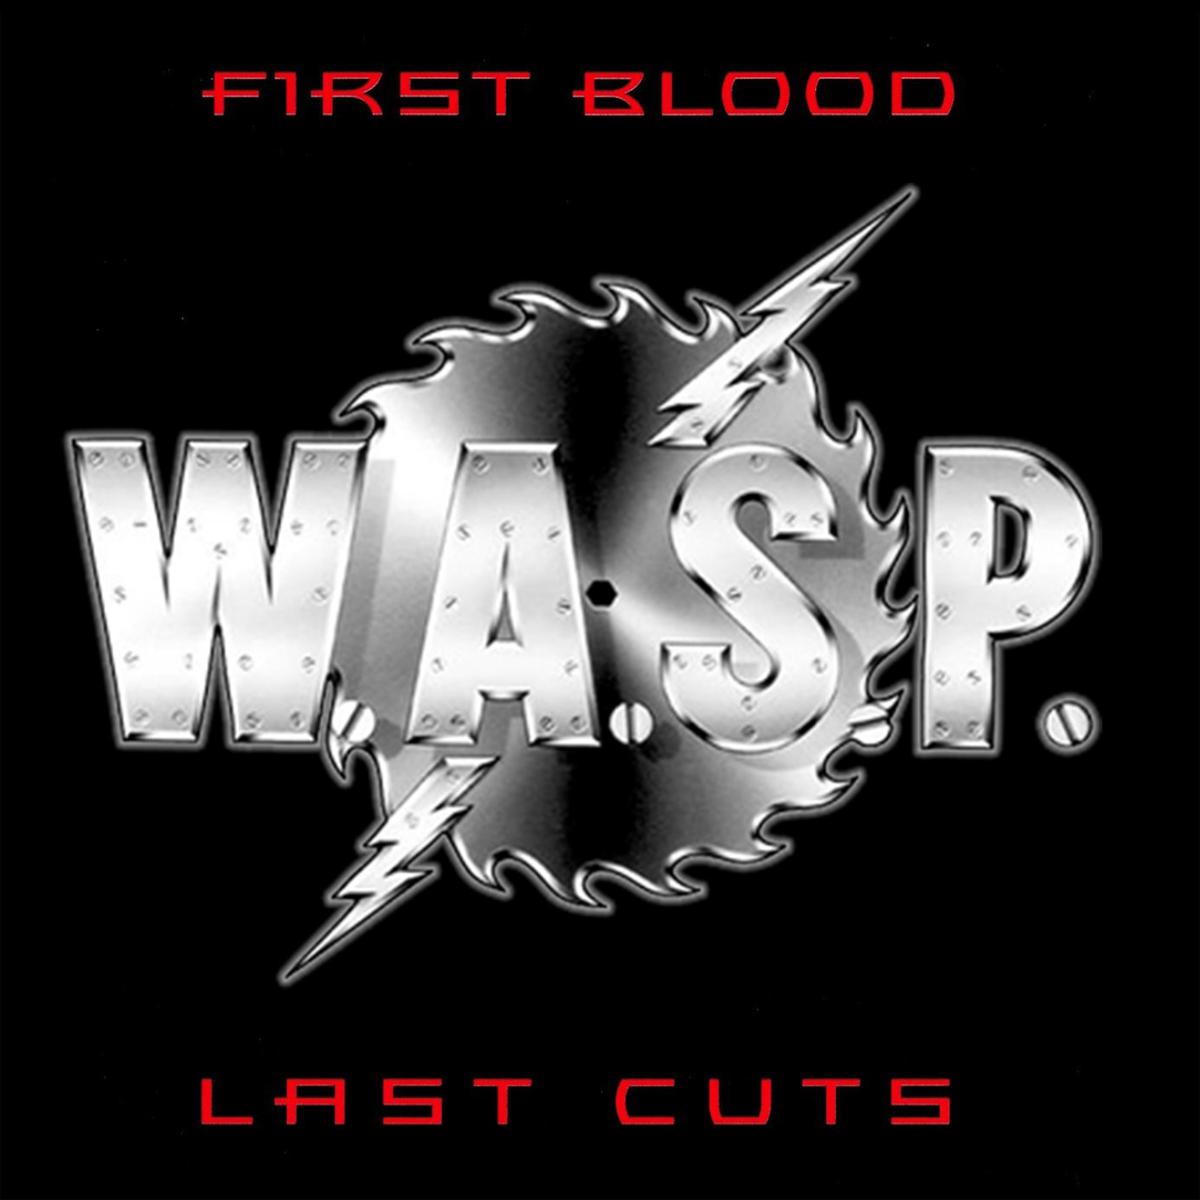 Wasp группа постеры. Васп группа логотип. Wasp first Blood last Cuts. Wasp группа эмблема. P s p ss